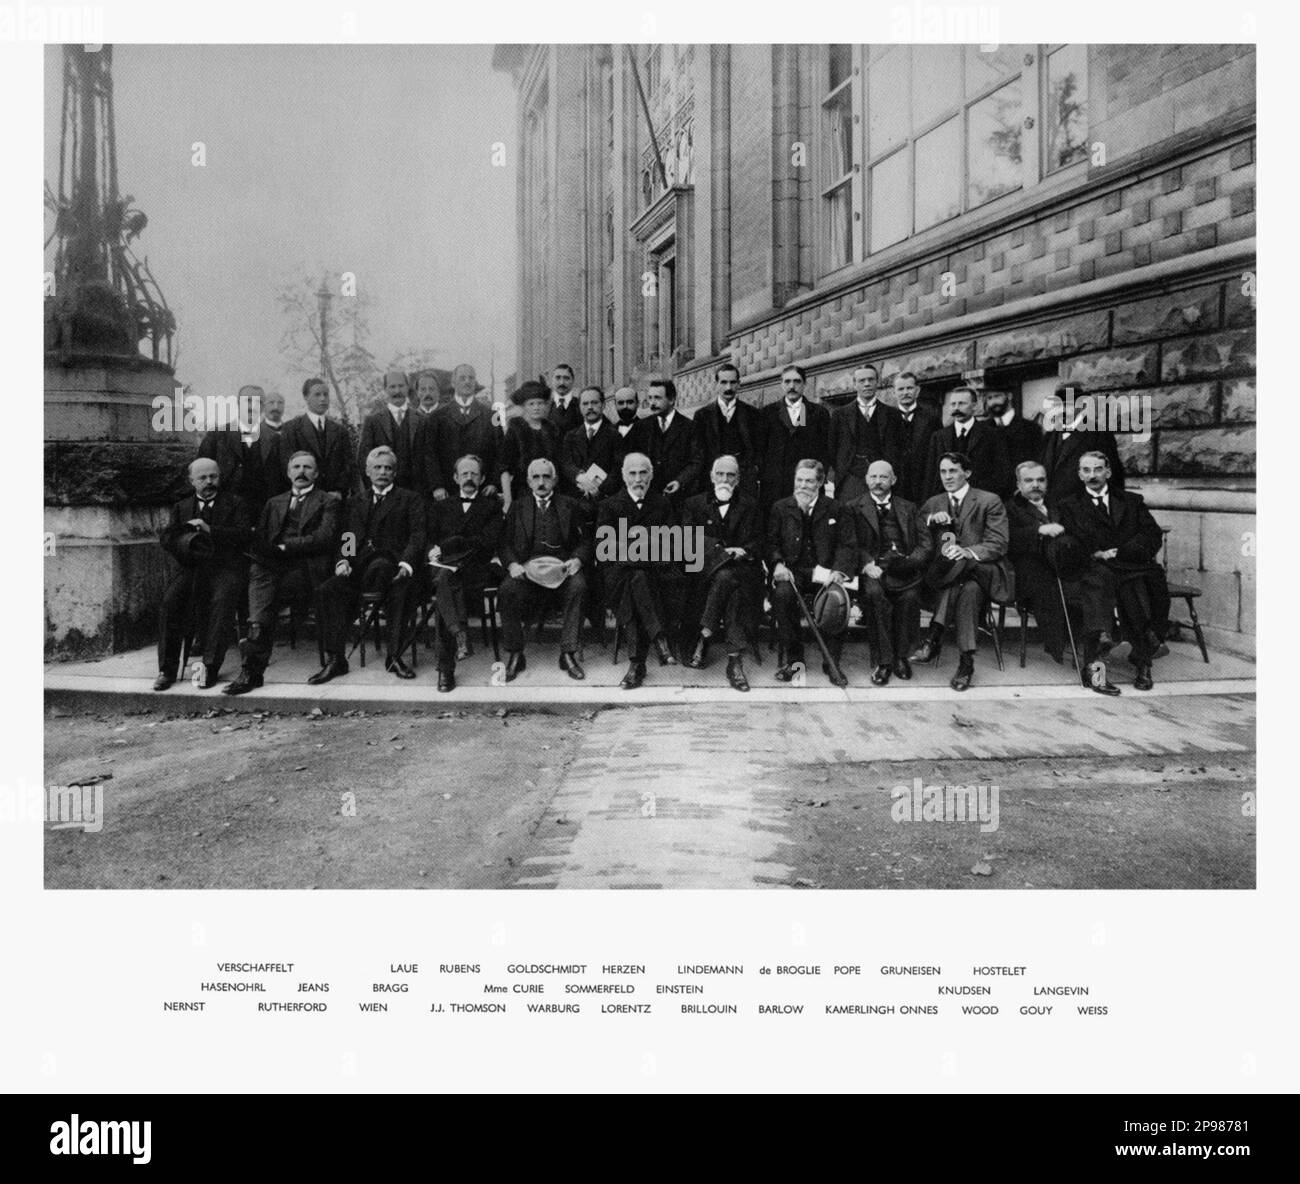 1913 , Bruxelles , Belgio : il fisico tedesco ALBERT EINSTEIN ( 1879 - 1955 ) , vincitore del premio Nobel 1921, durante la seconda conferenza Solvay sulla fisica, Bruxelles. In questa foto con Madame MARIE CURIE , DE BROGLIE , VERSCHAFFELT , HASENOHRL , NERNST , RUTHEFORD , LAUE , BRAGG , WIEN , RUBENS , J.J. THOMSON , WARBURG , GOLDSCHMIDT , HERZEN , SOMMERFELD , LORENTZ , LINDEMANN , BRILLOUIN , BARLOW , PAPA , KAMERLINGH ONNES, GRUNEISEN, KNUDSEN, HOSTELET, LEGNO, GOUY , LANGEVIN and WEISS - foto storiche - foto storica - scienziato - scienziato - ritratto - fisica - Foto Stock